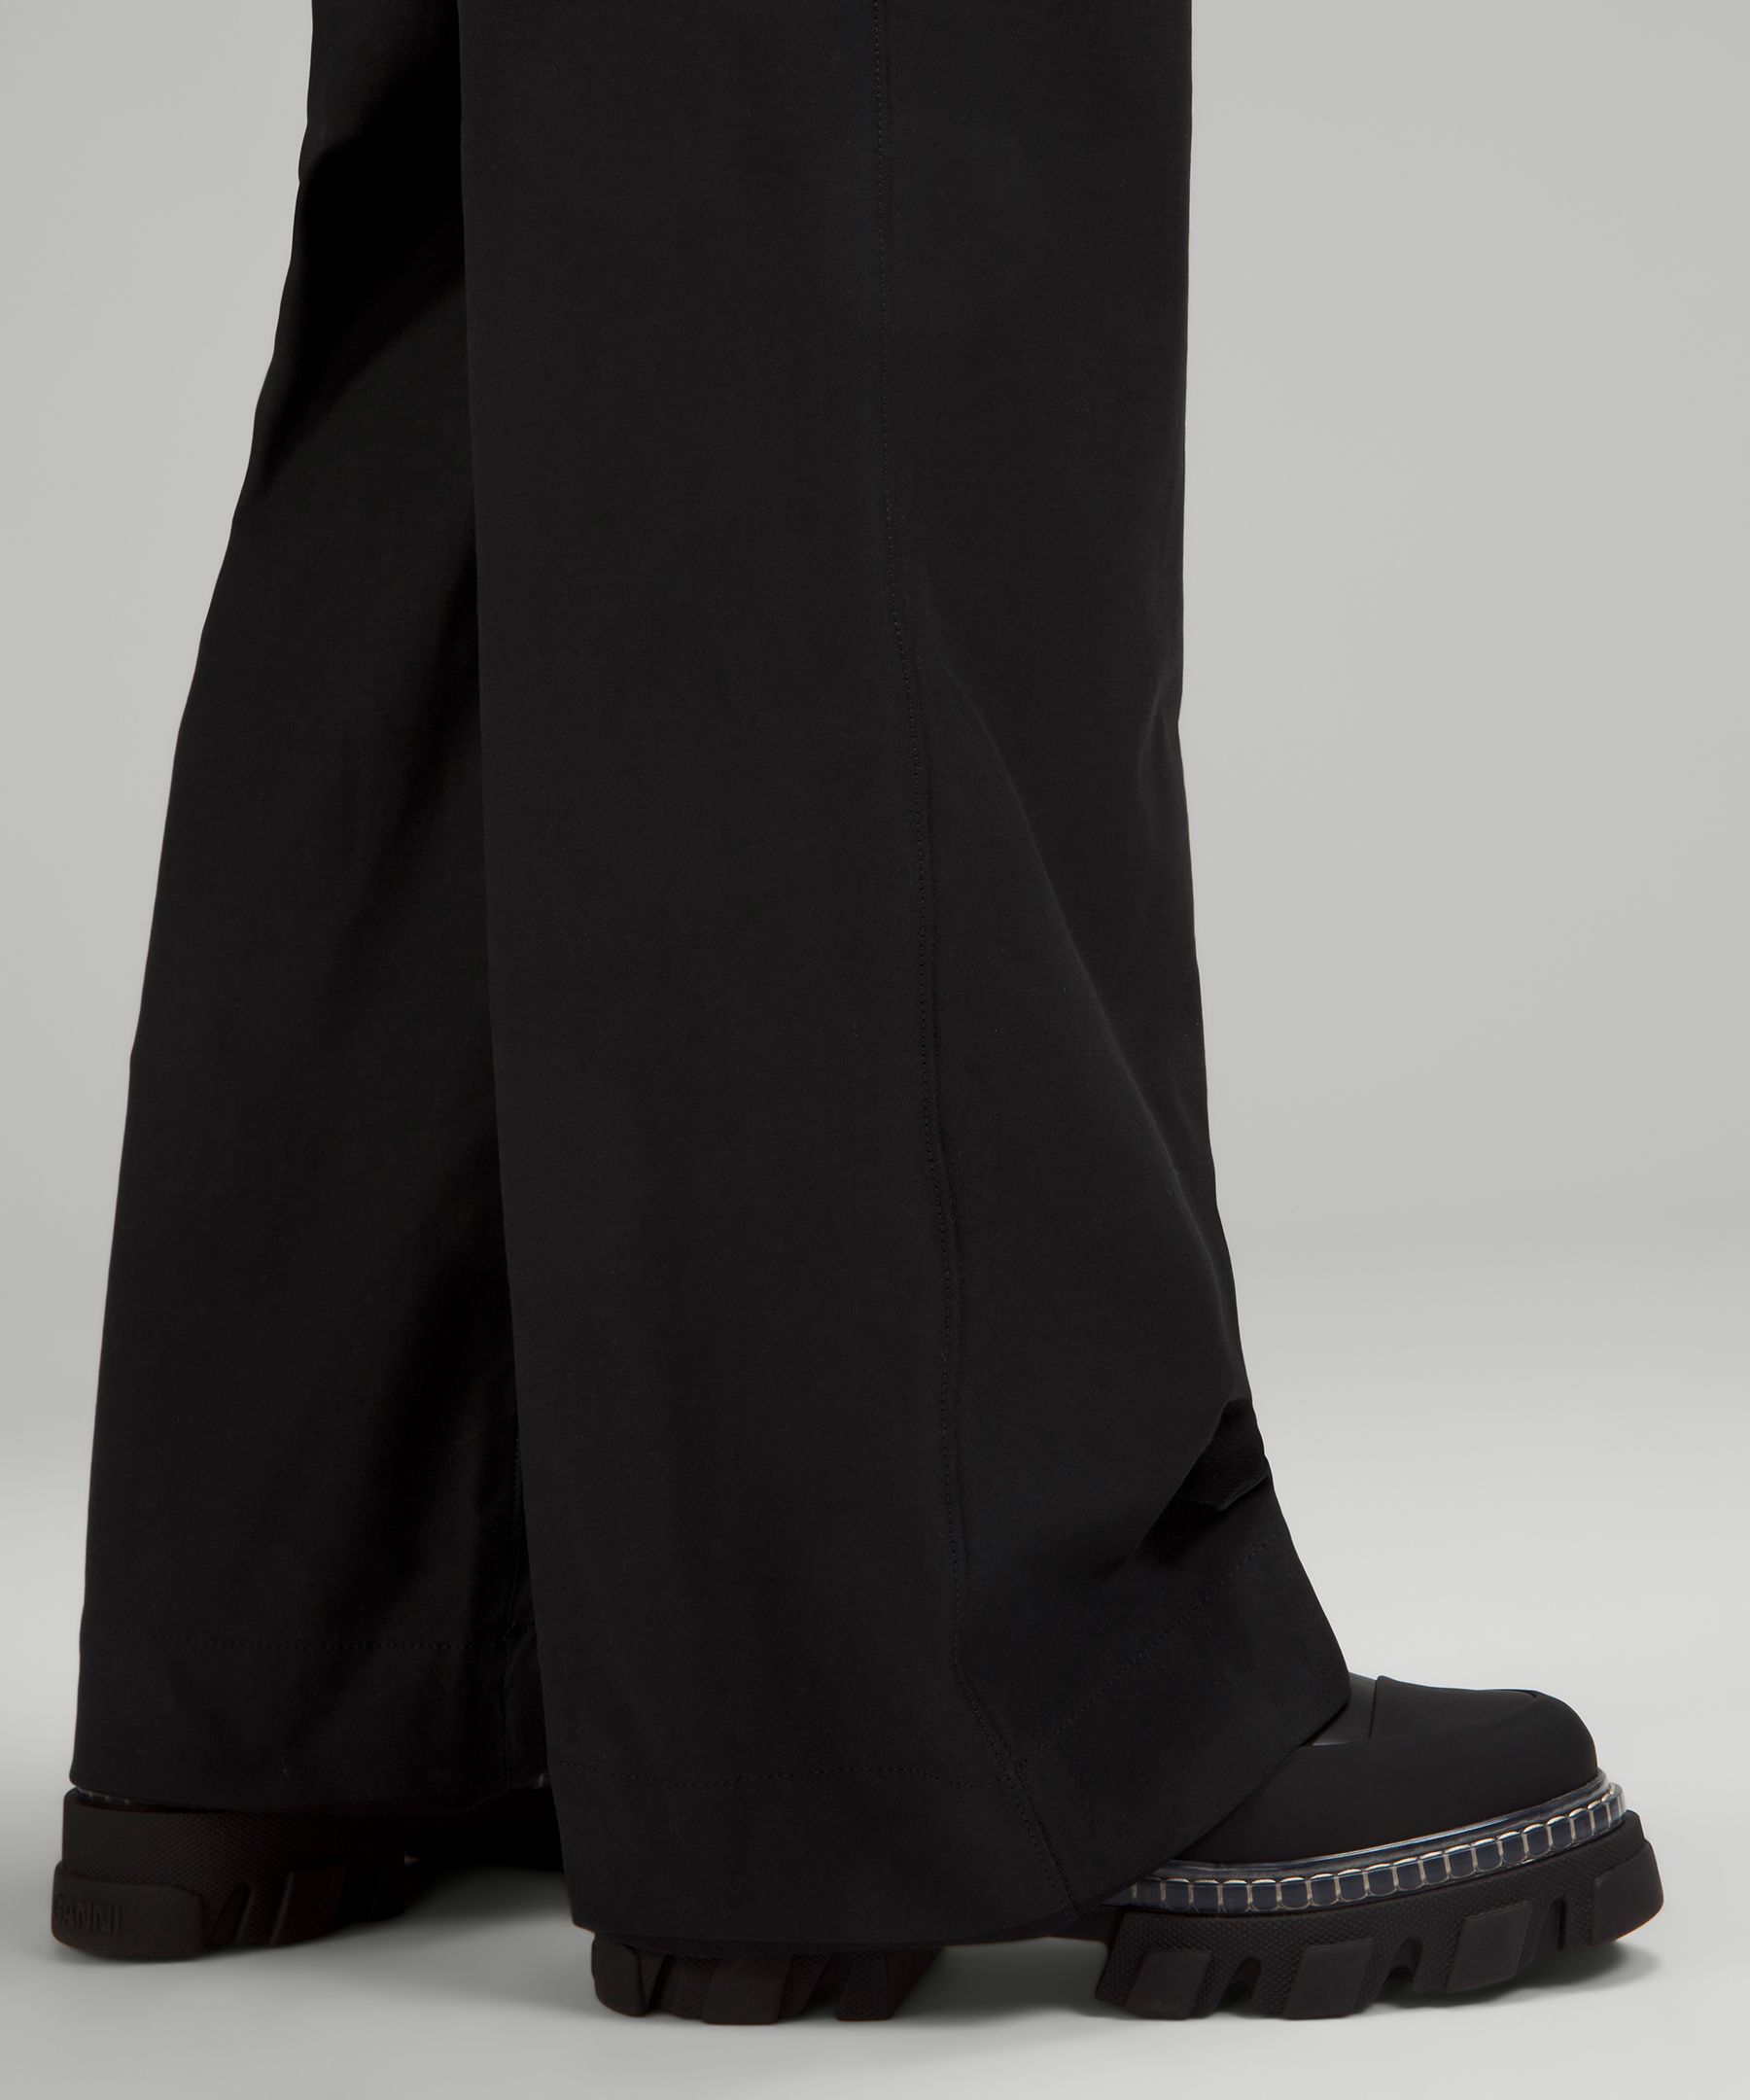 City Sleek 5 Pocket High-Rise Wide-Leg Pant Full Length *Light Utilitech, Women's Trousers